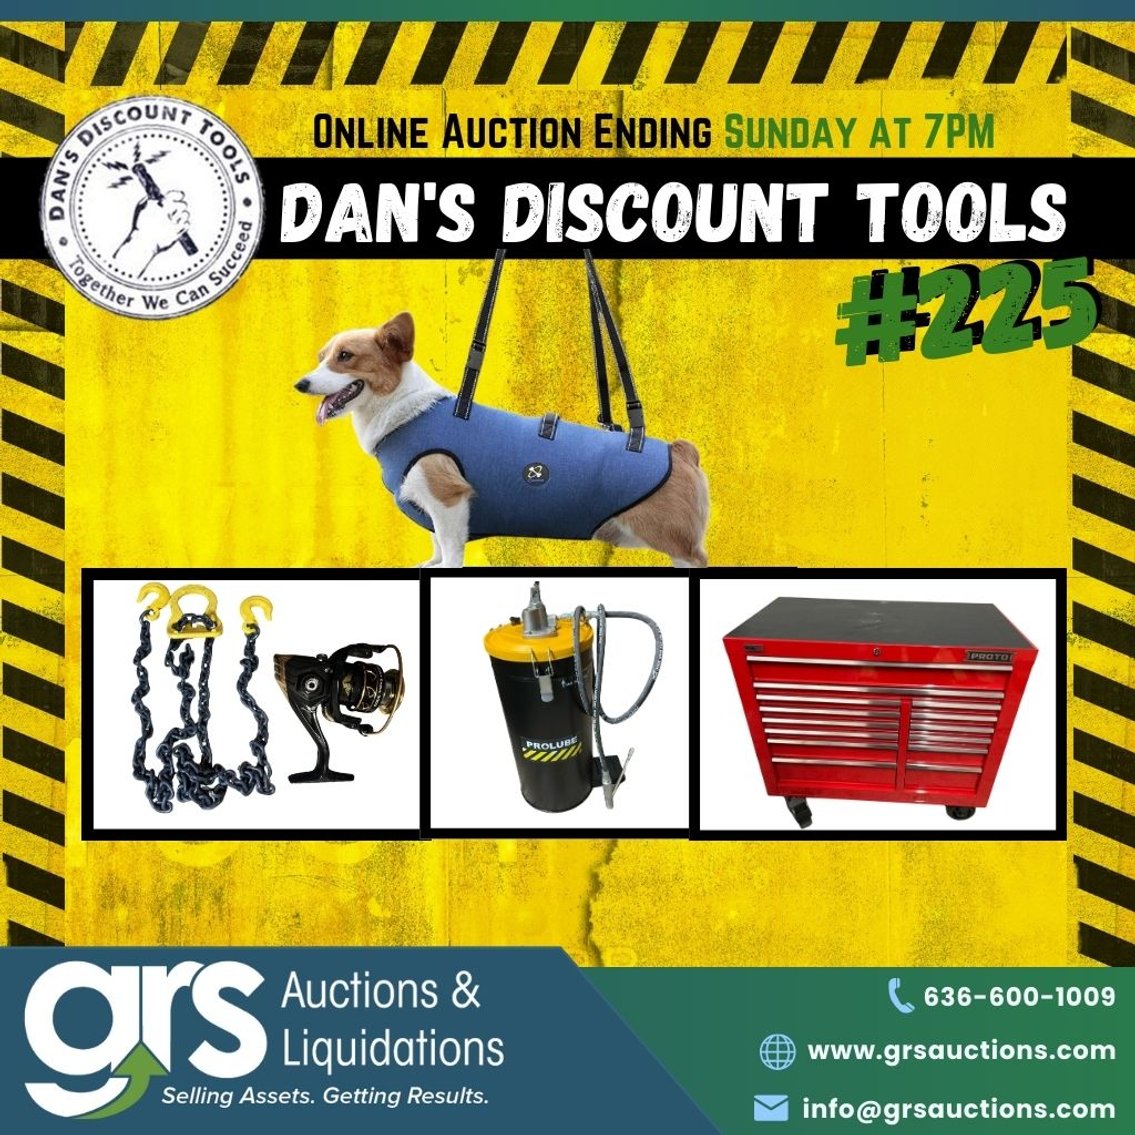 Dan's Discount Tools #225